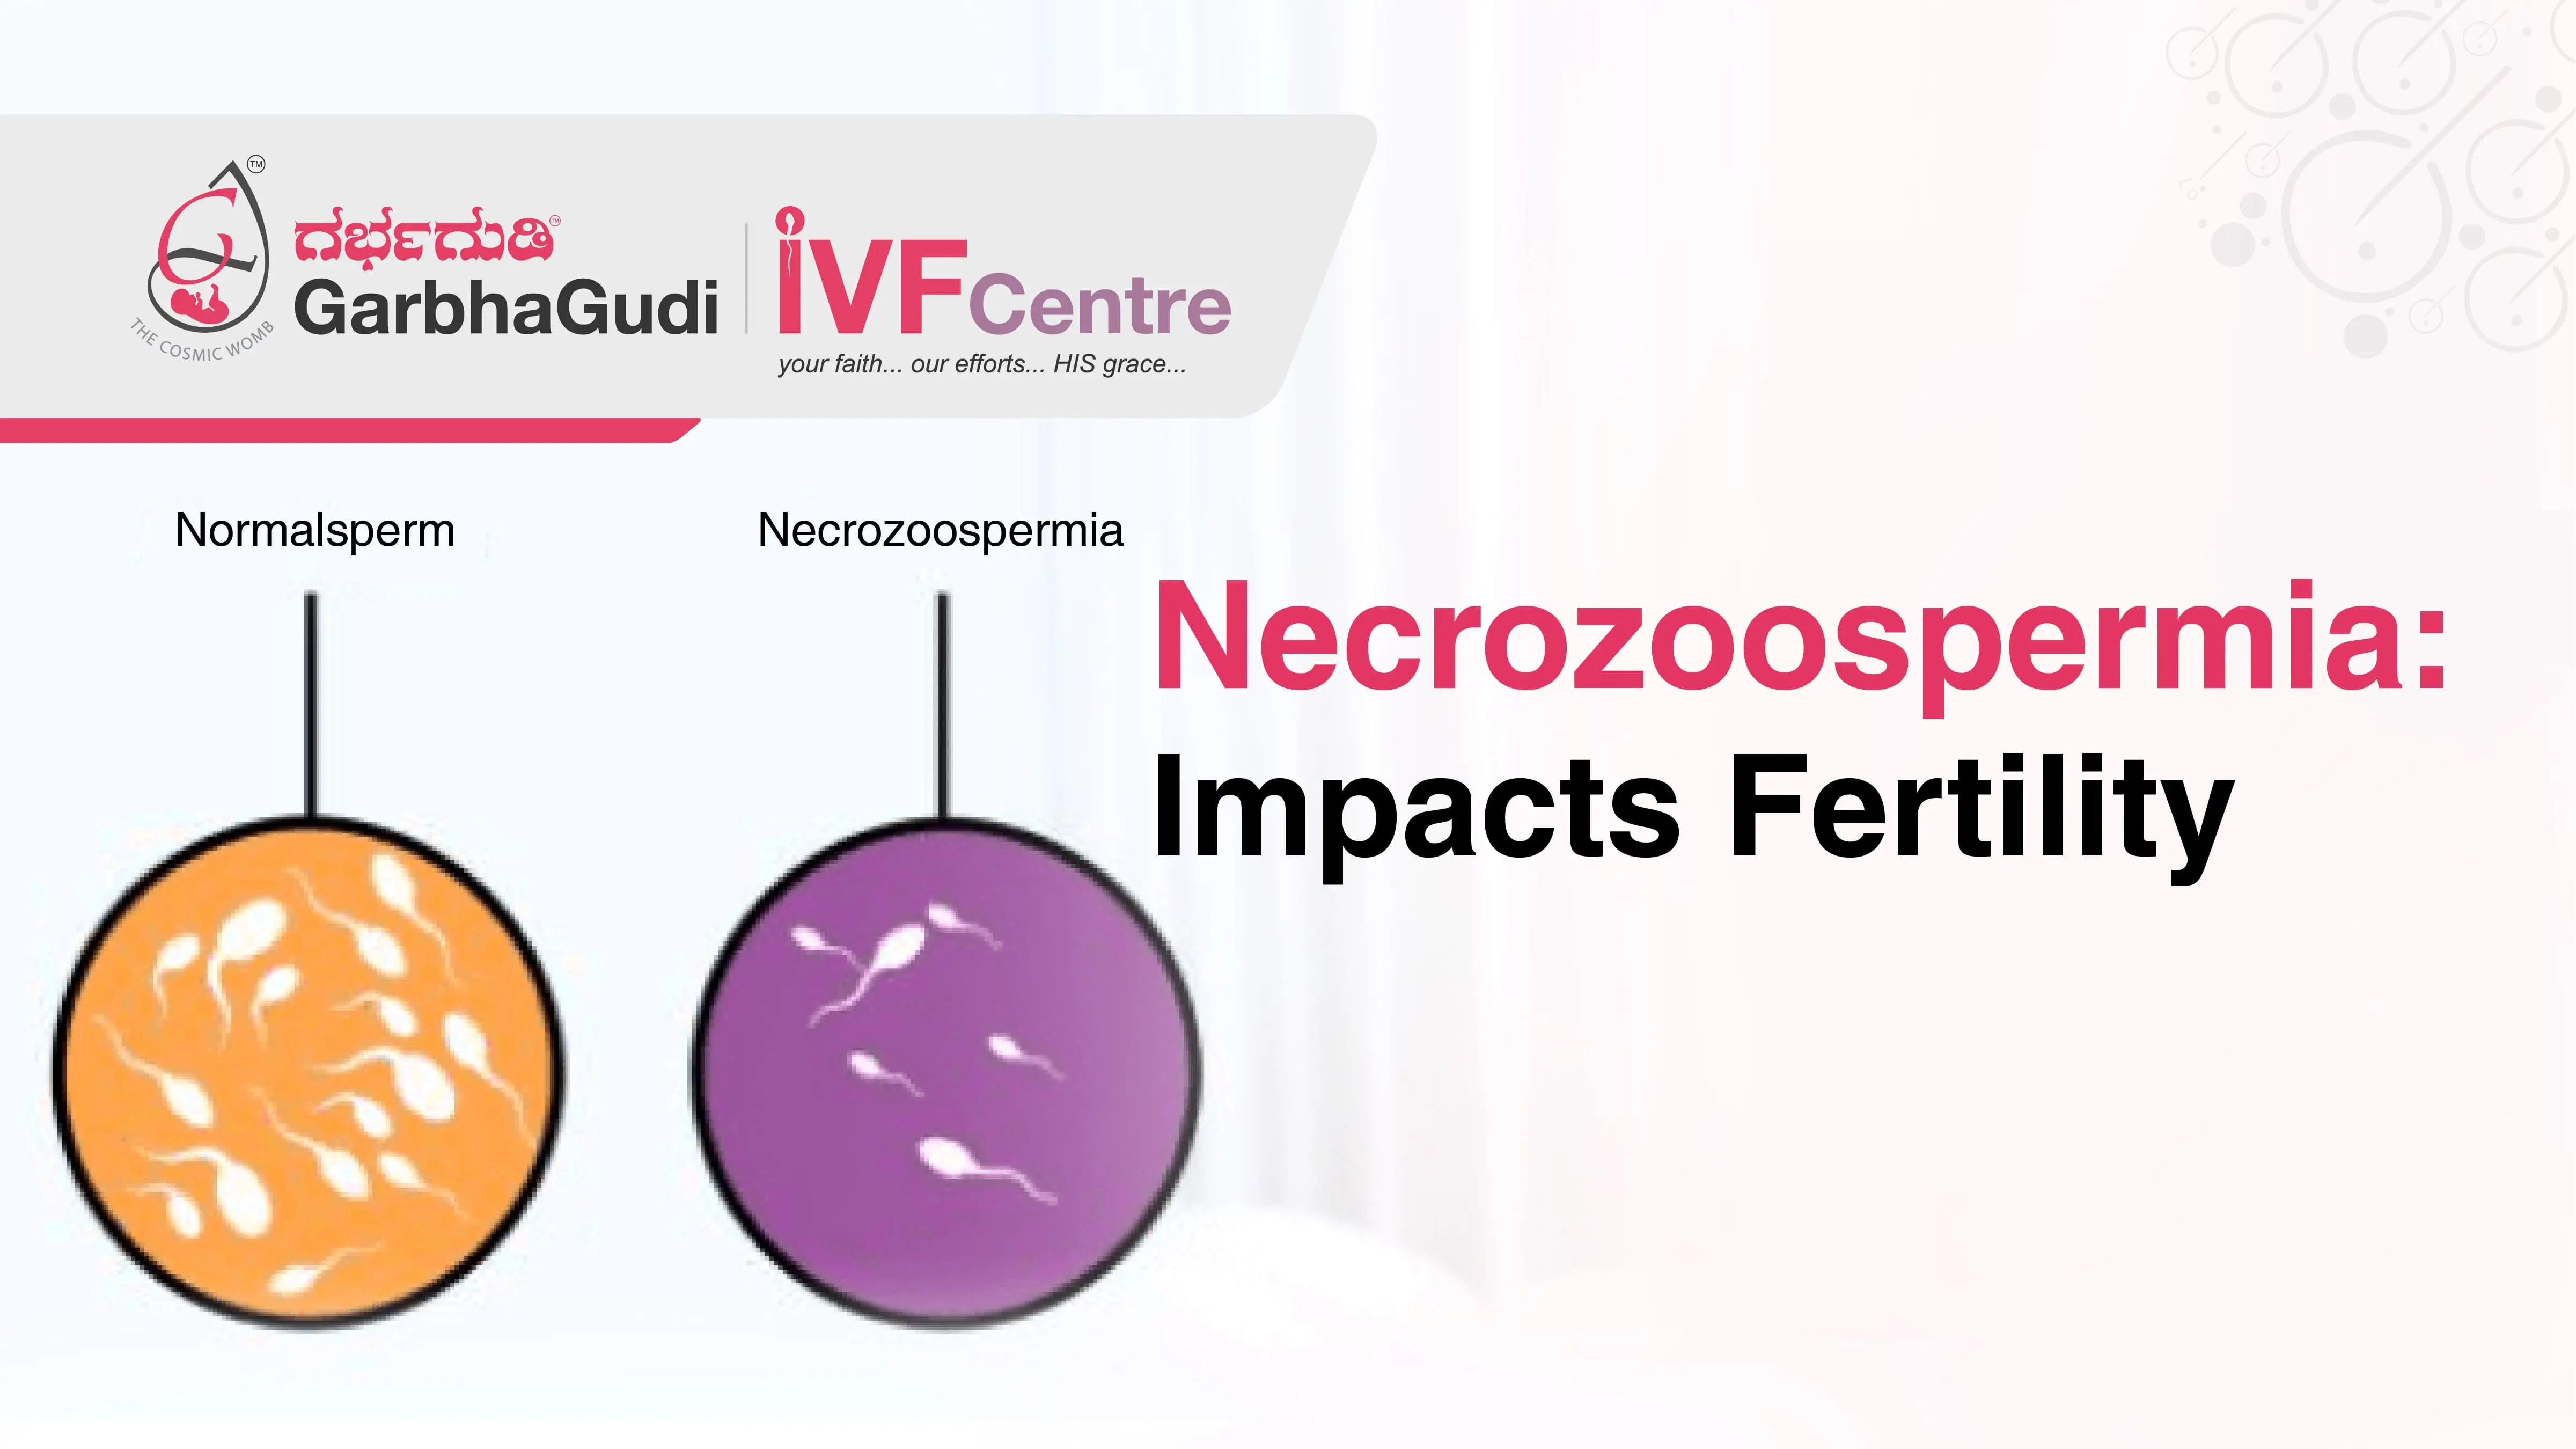 Necrozoospermia: Impacts on Fertility